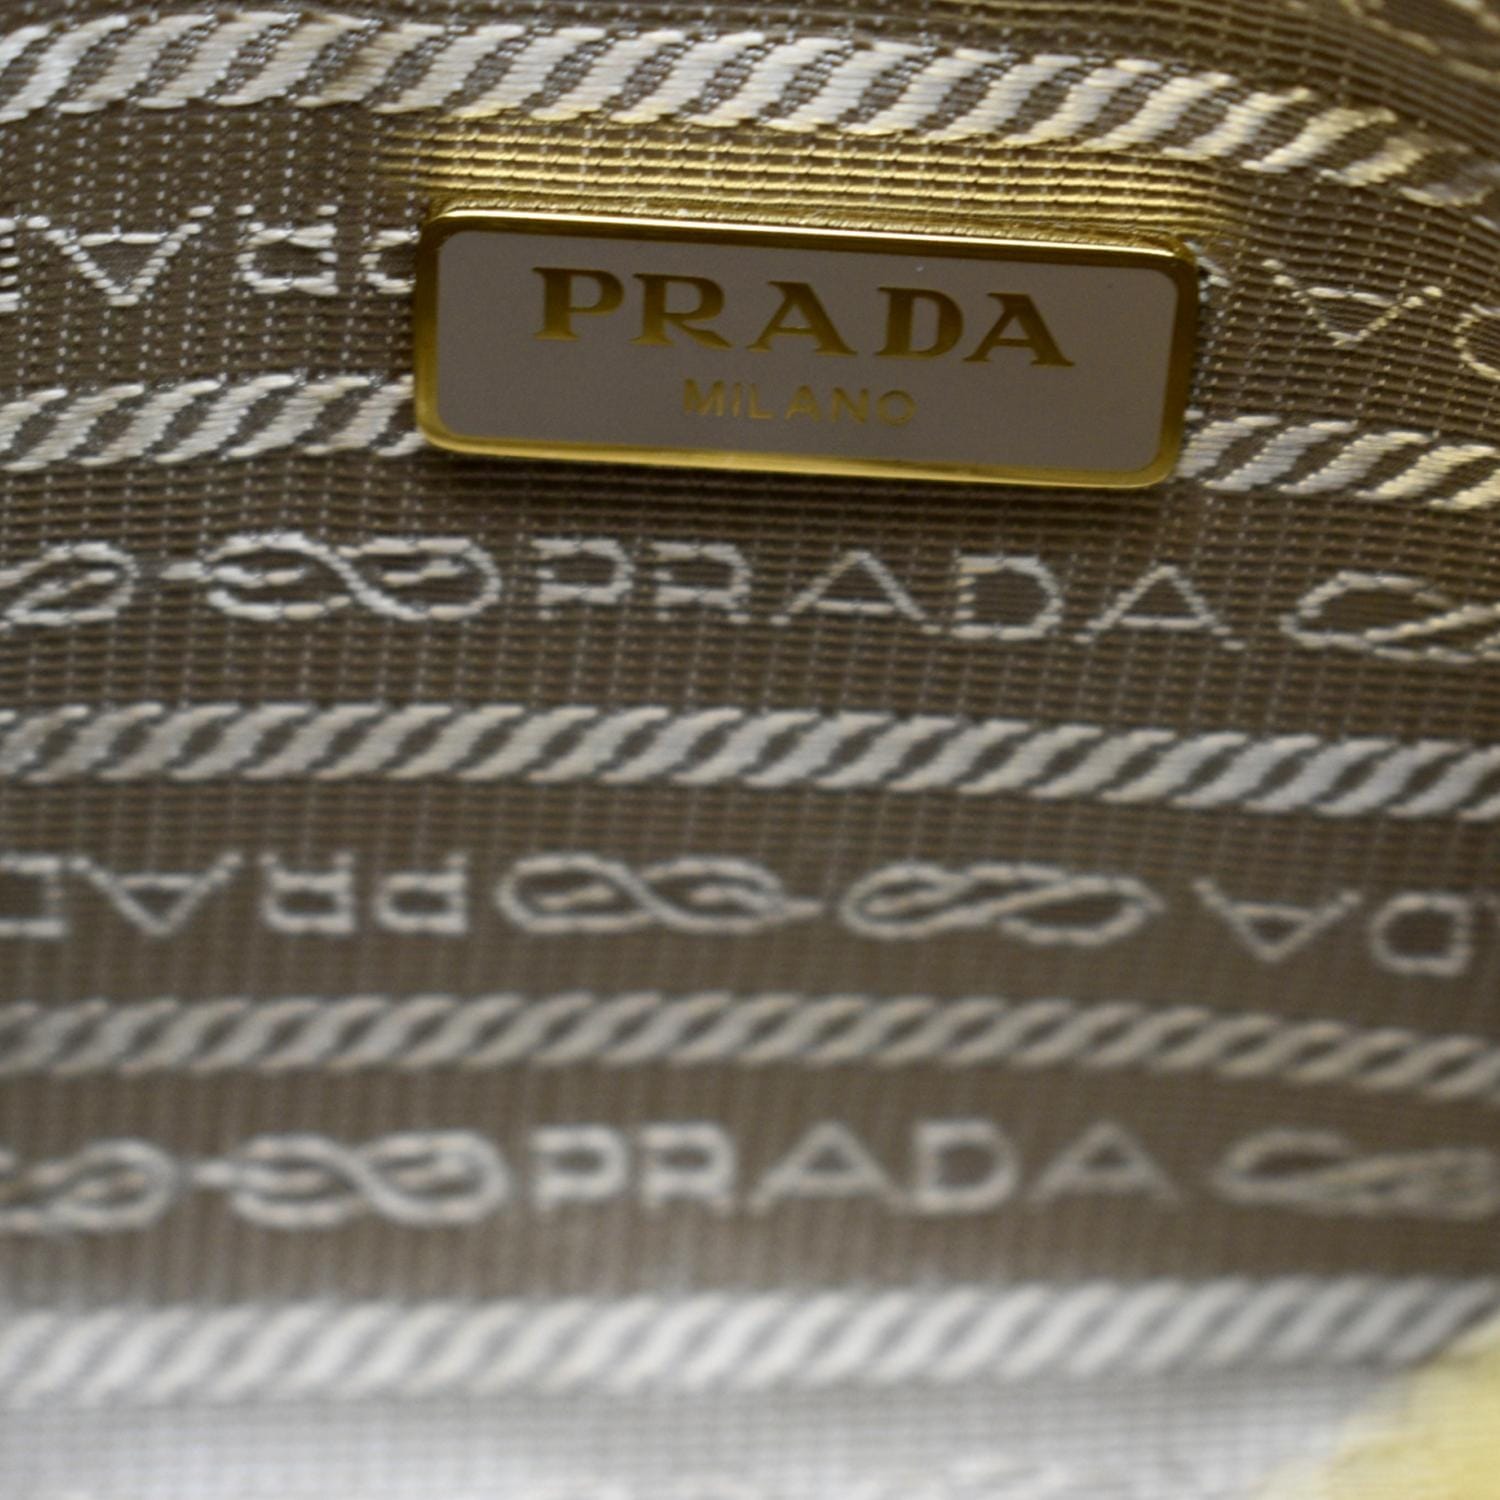 Prada Re-Edition 2005 Saffiano Leather Bag w/ Gold Hardware at 1stDibs